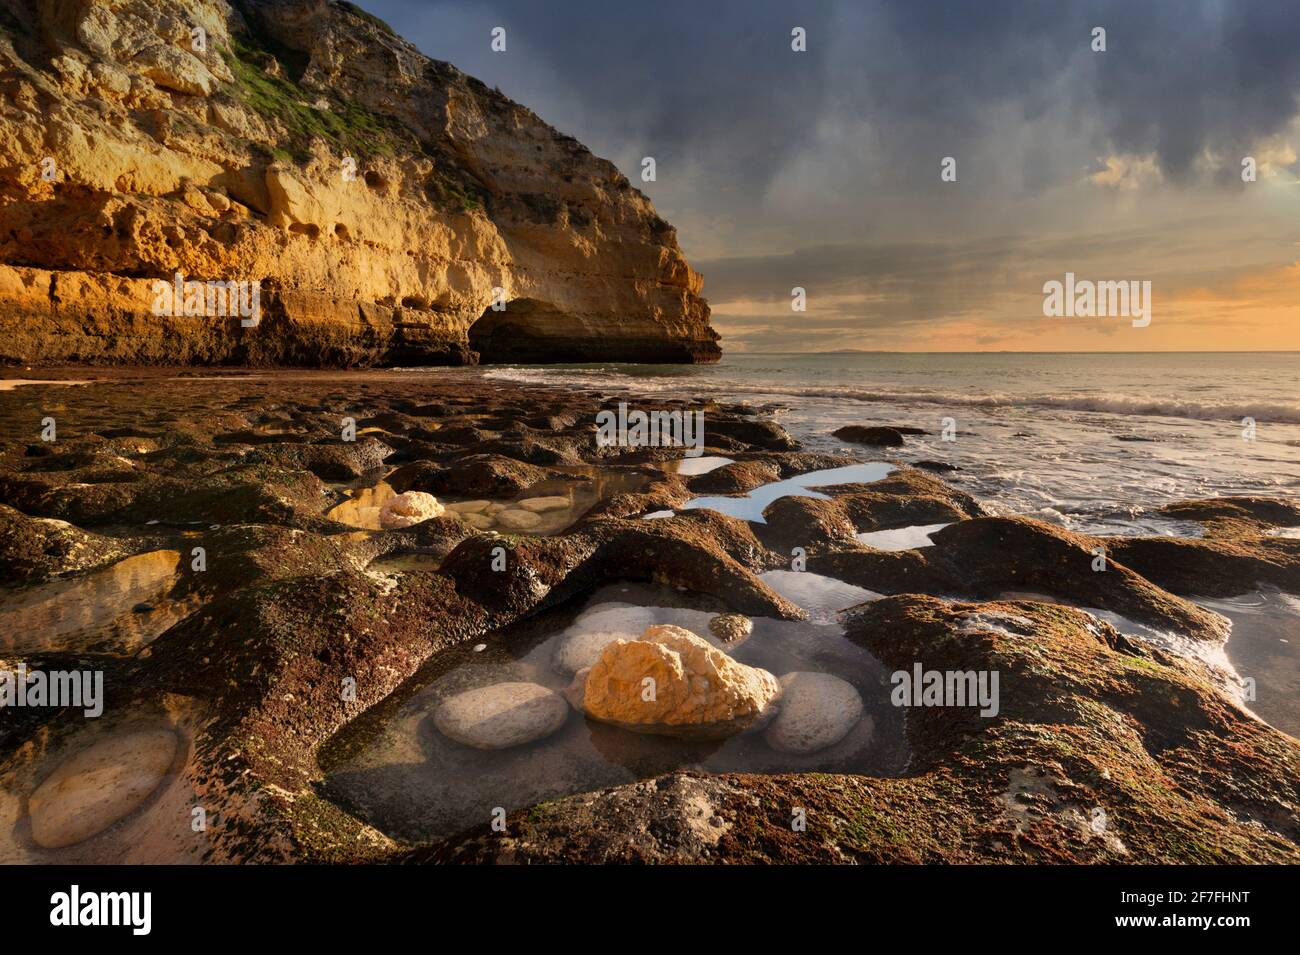 Praia do Paraíso, rock pools and cliffs, Algarve, Portugal Stock Photo